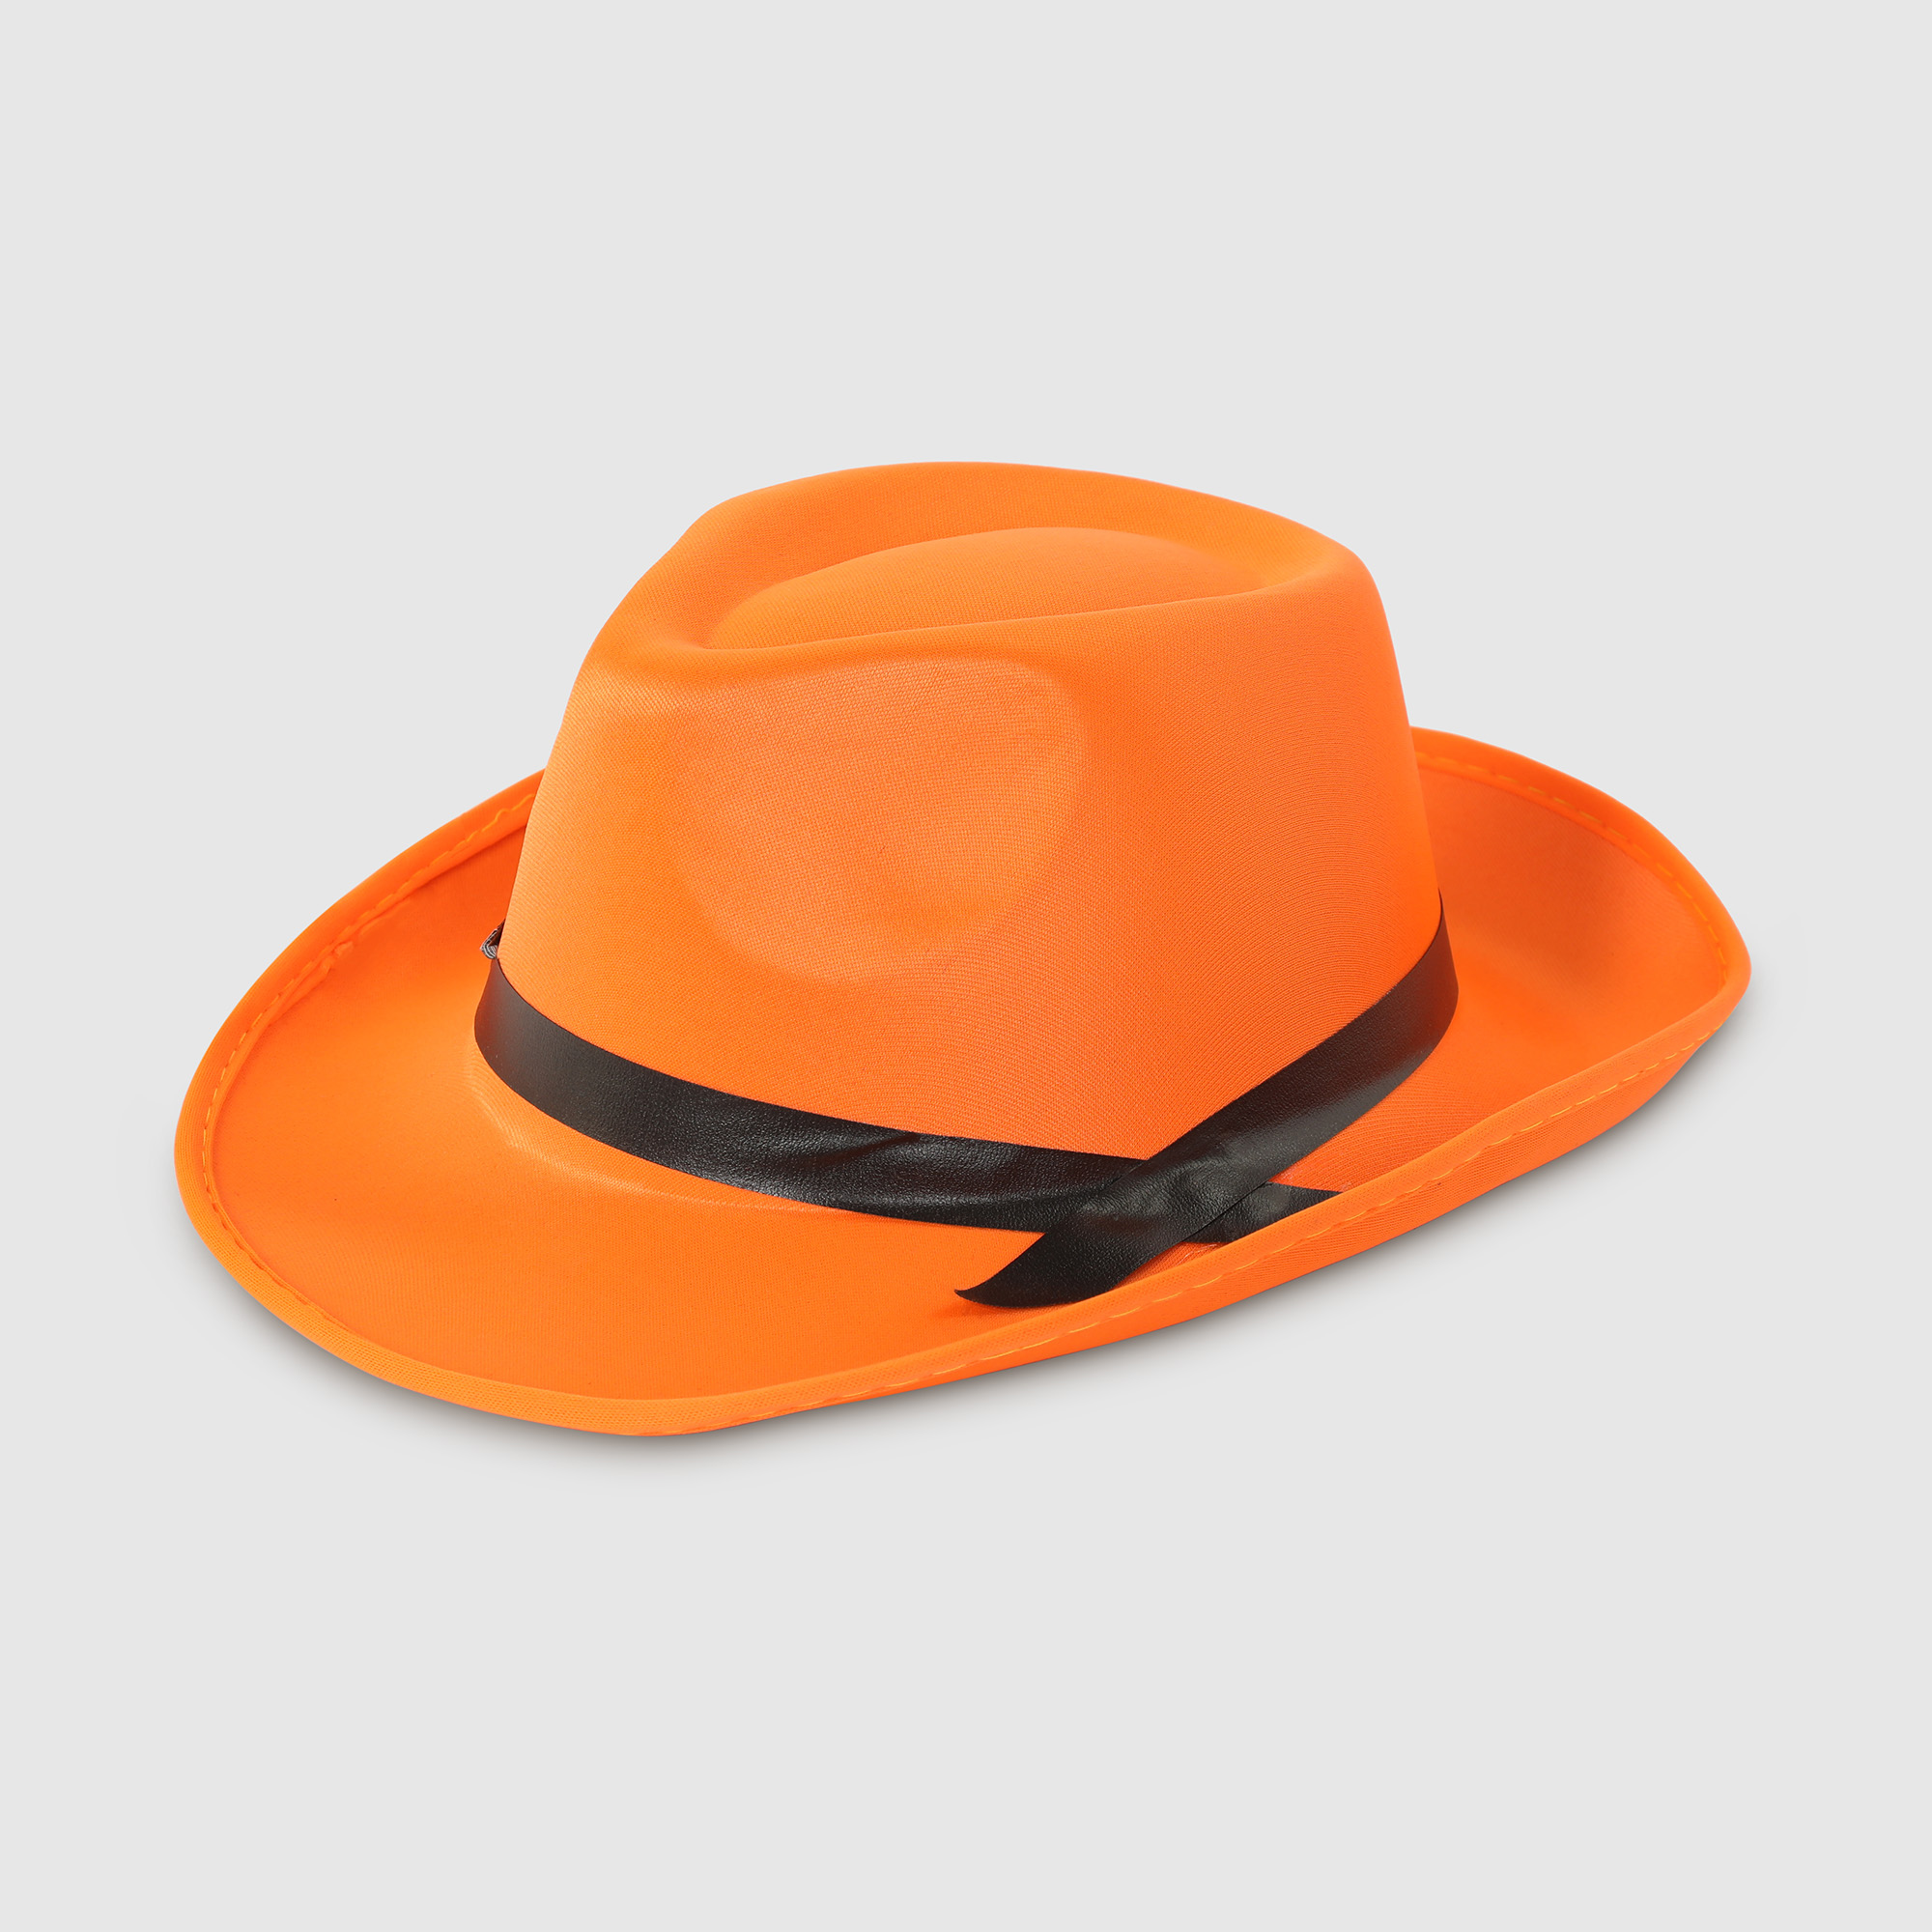 Шляпа с лентой Long Cheng Yiwu City оранжевая 57, цвет оранжевый, размер 57 - фото 1